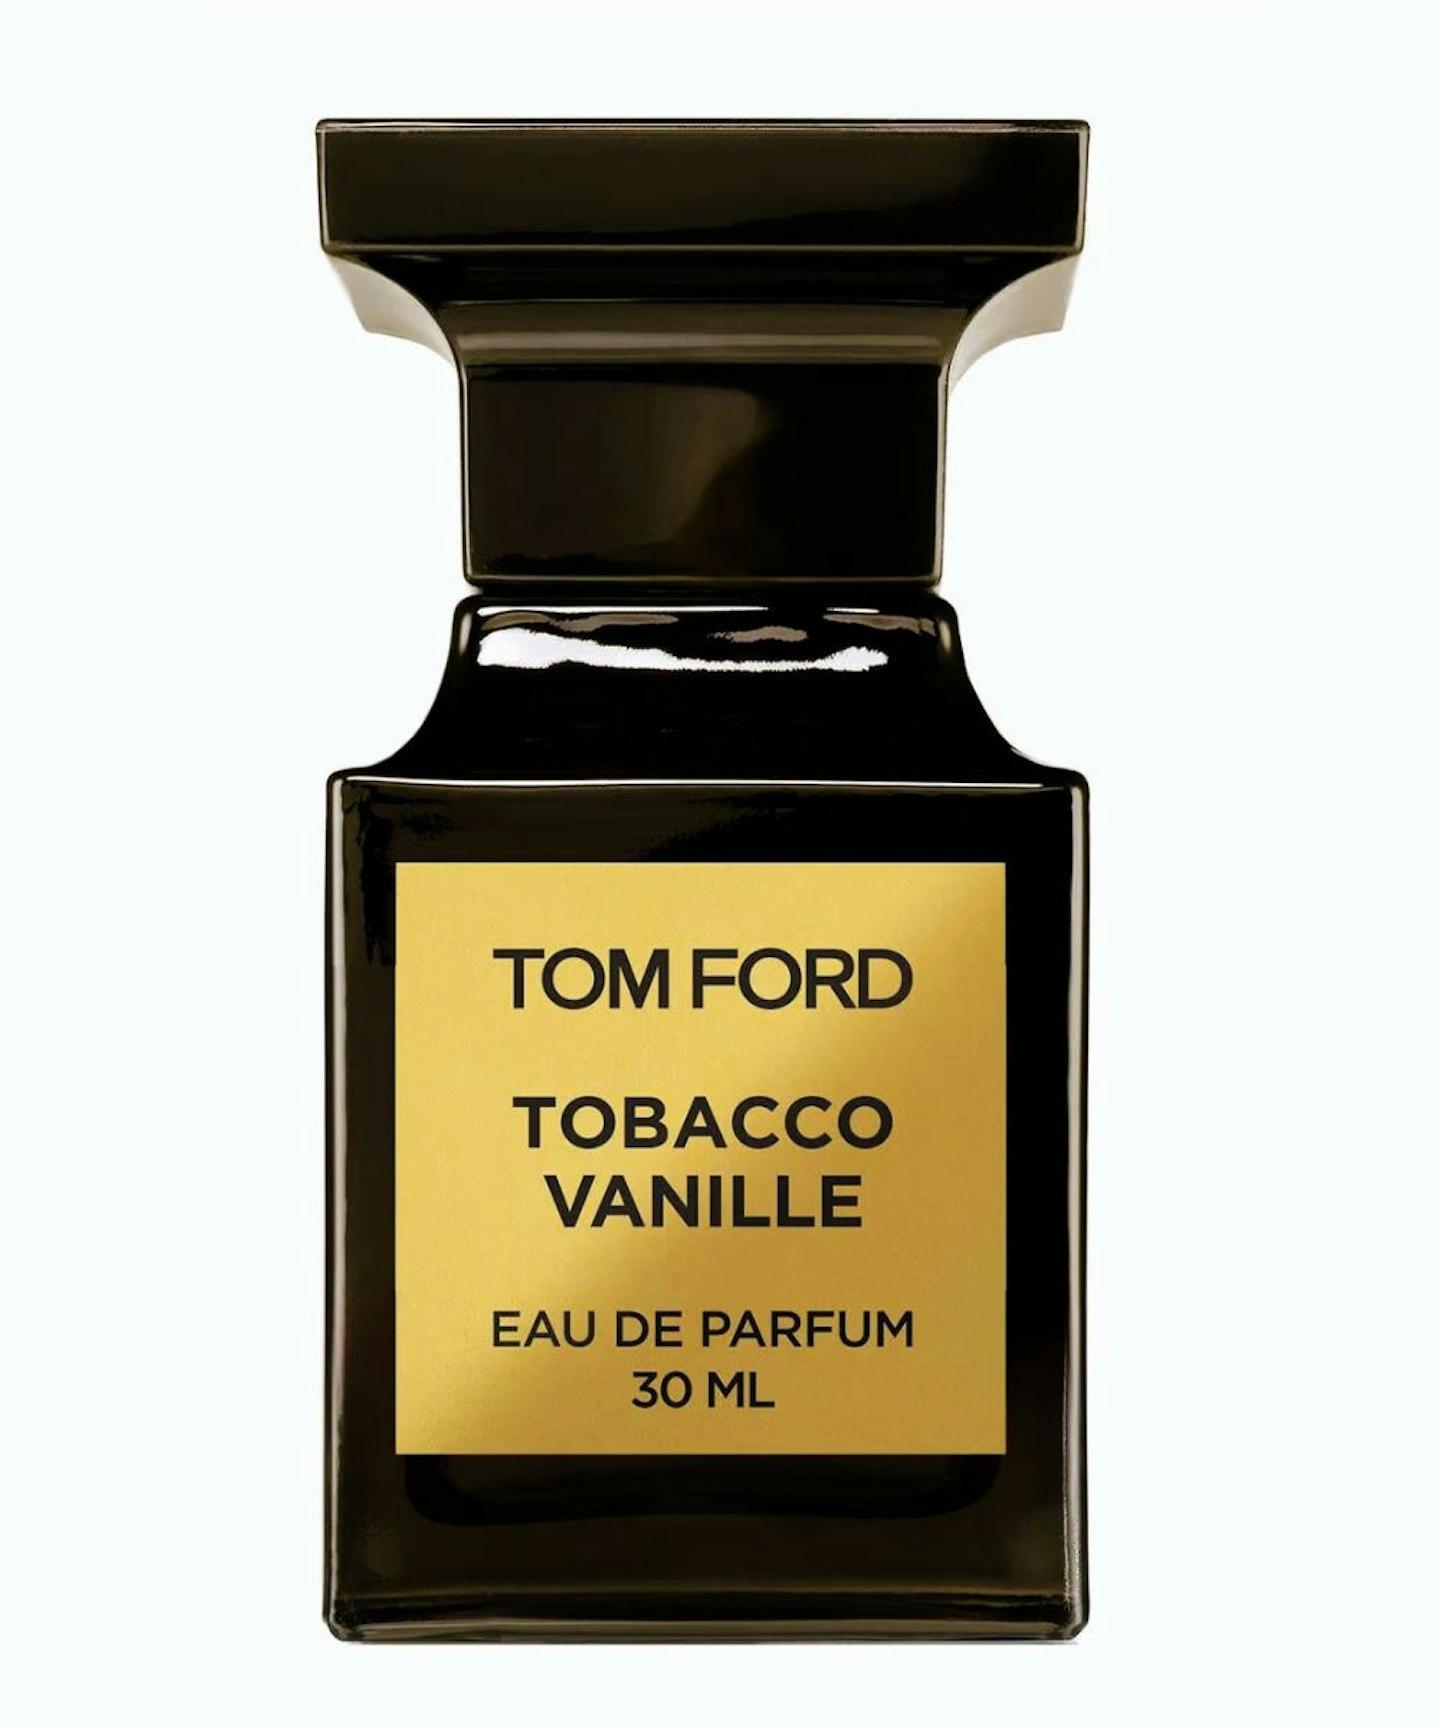 Tom Ford Tobacco Vanille Eau de Parfum 30ml 